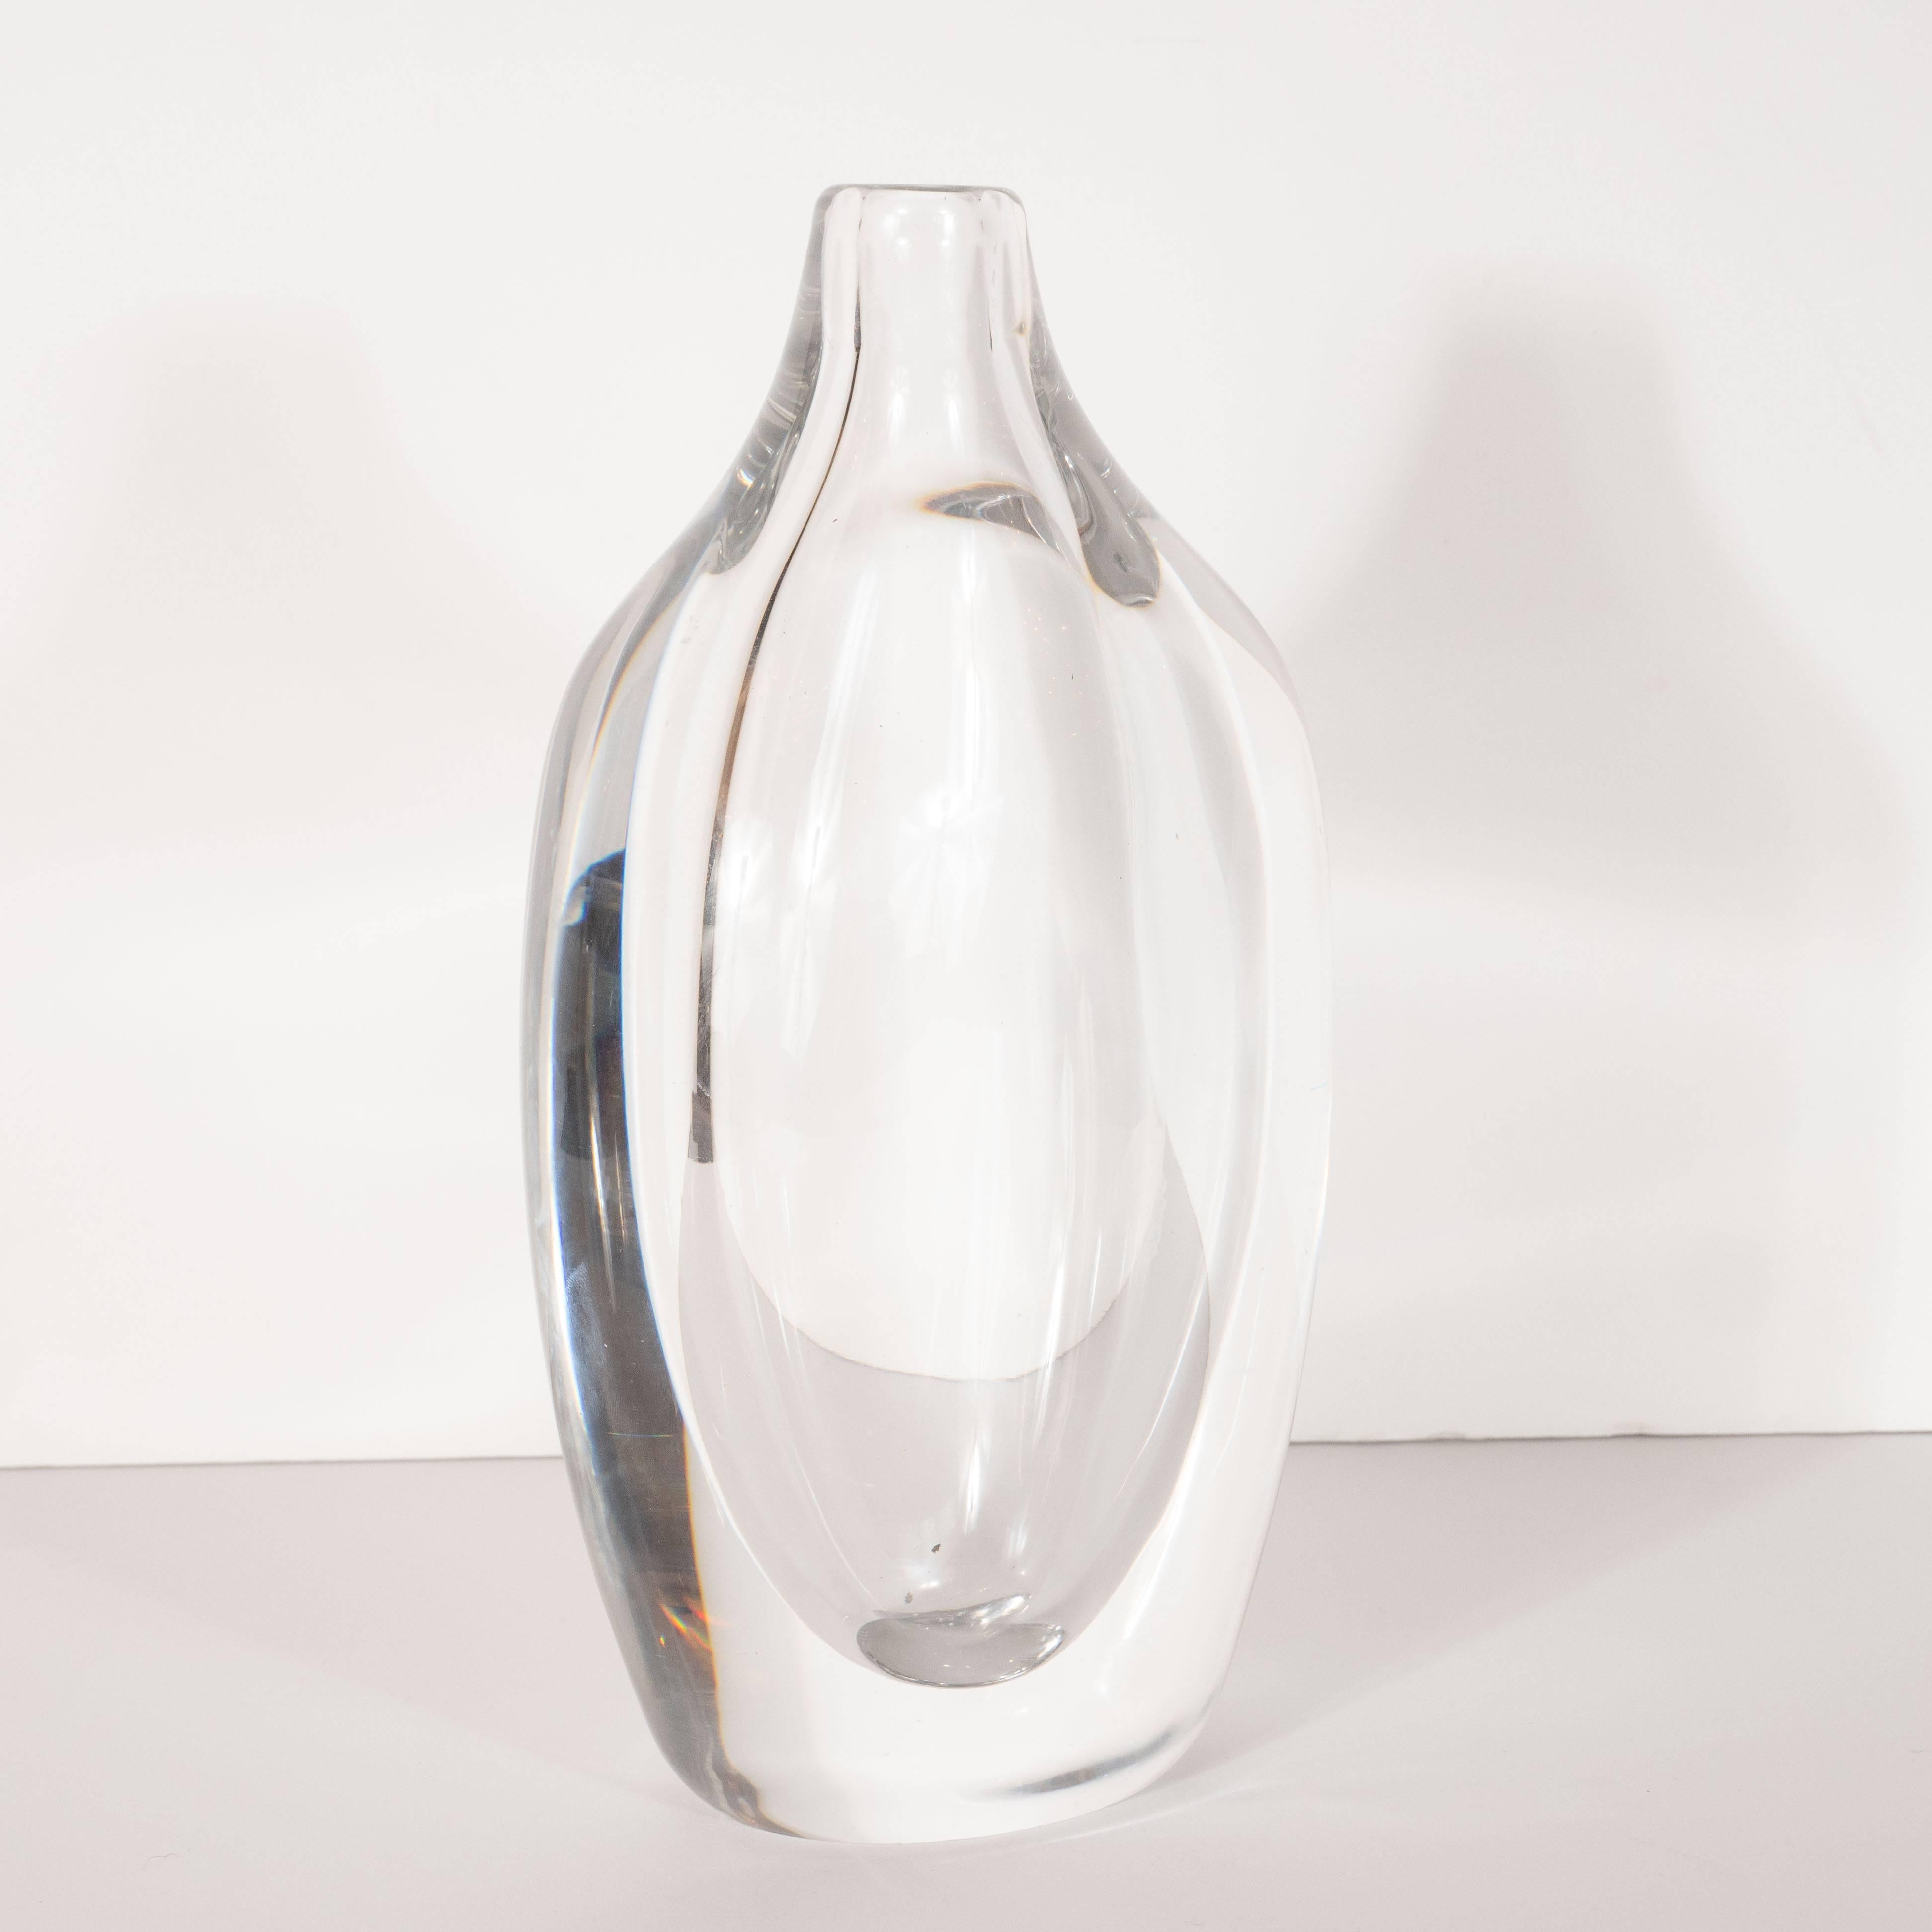 Swedish Scandinavian Mid-Century Modern Sculptural Translucent Glass Vase by Orrefors